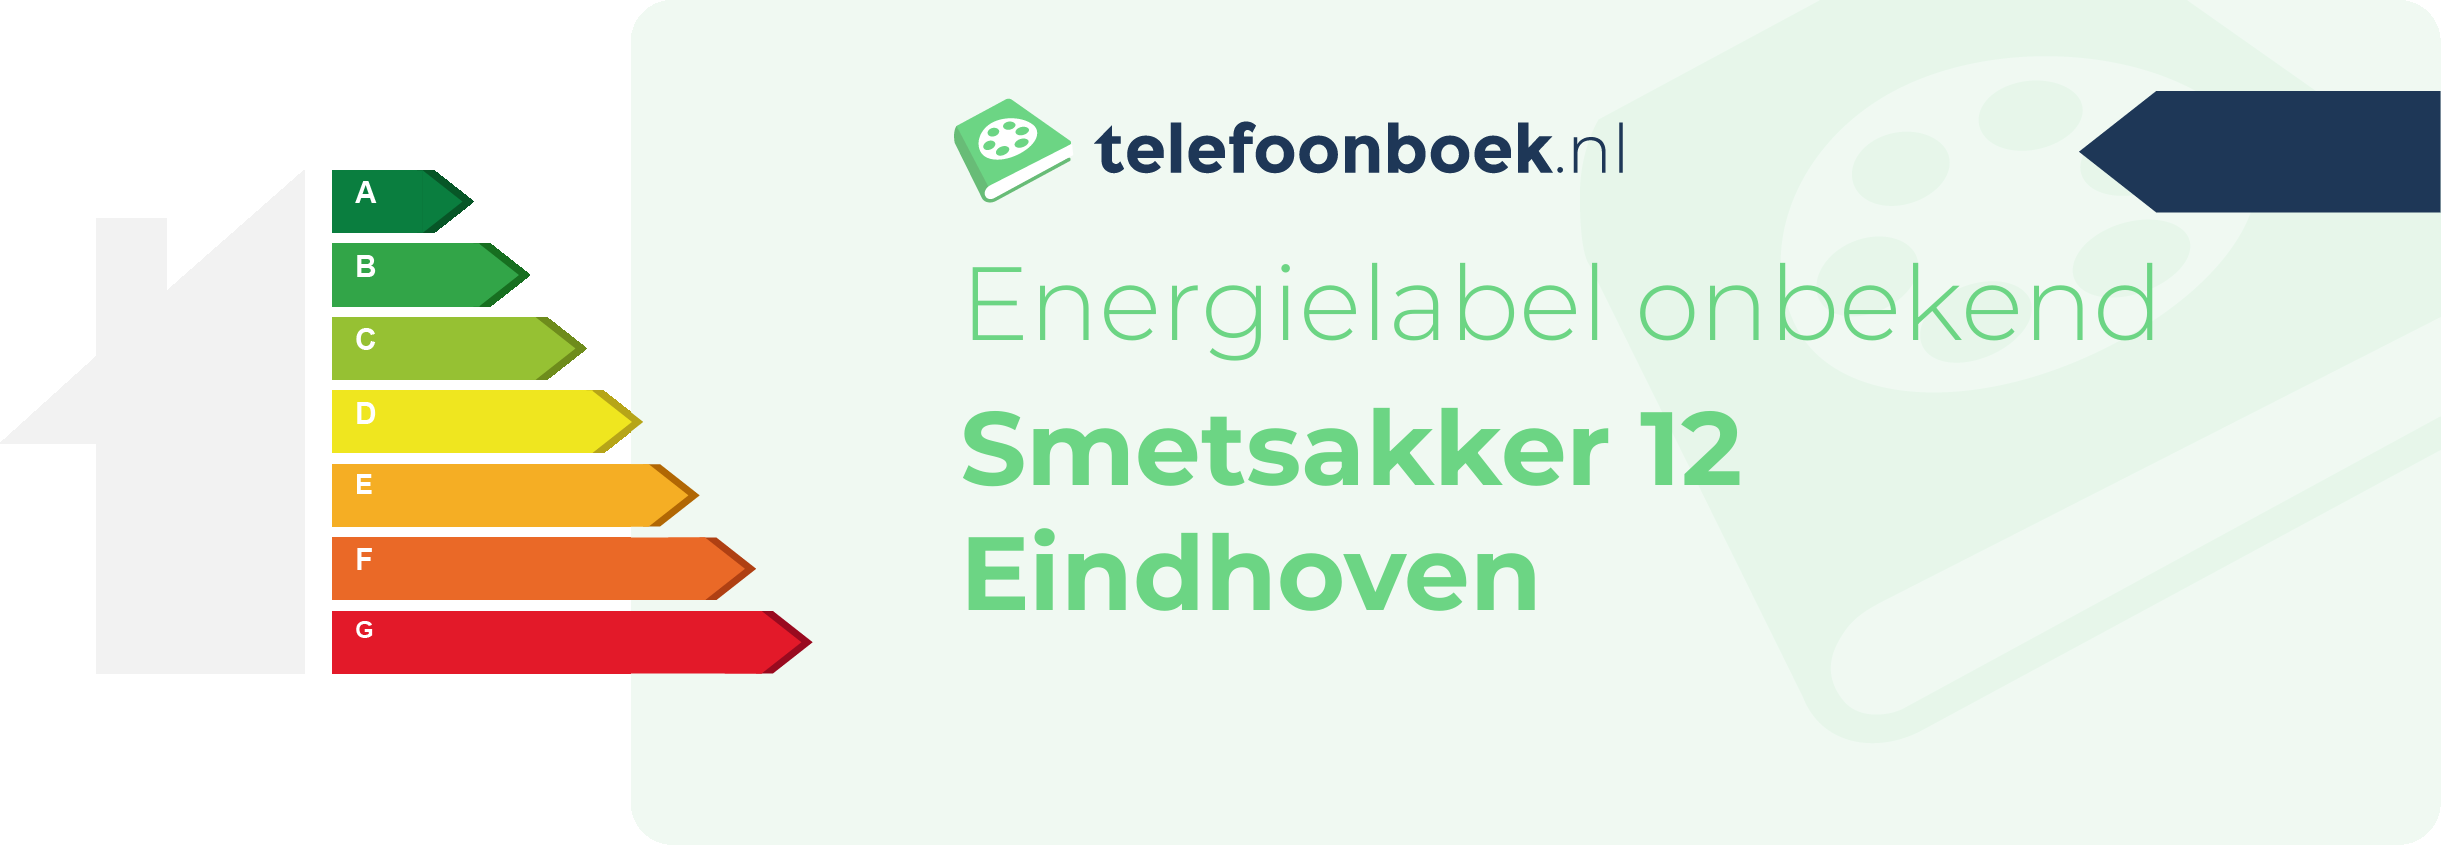 Energielabel Smetsakker 12 Eindhoven